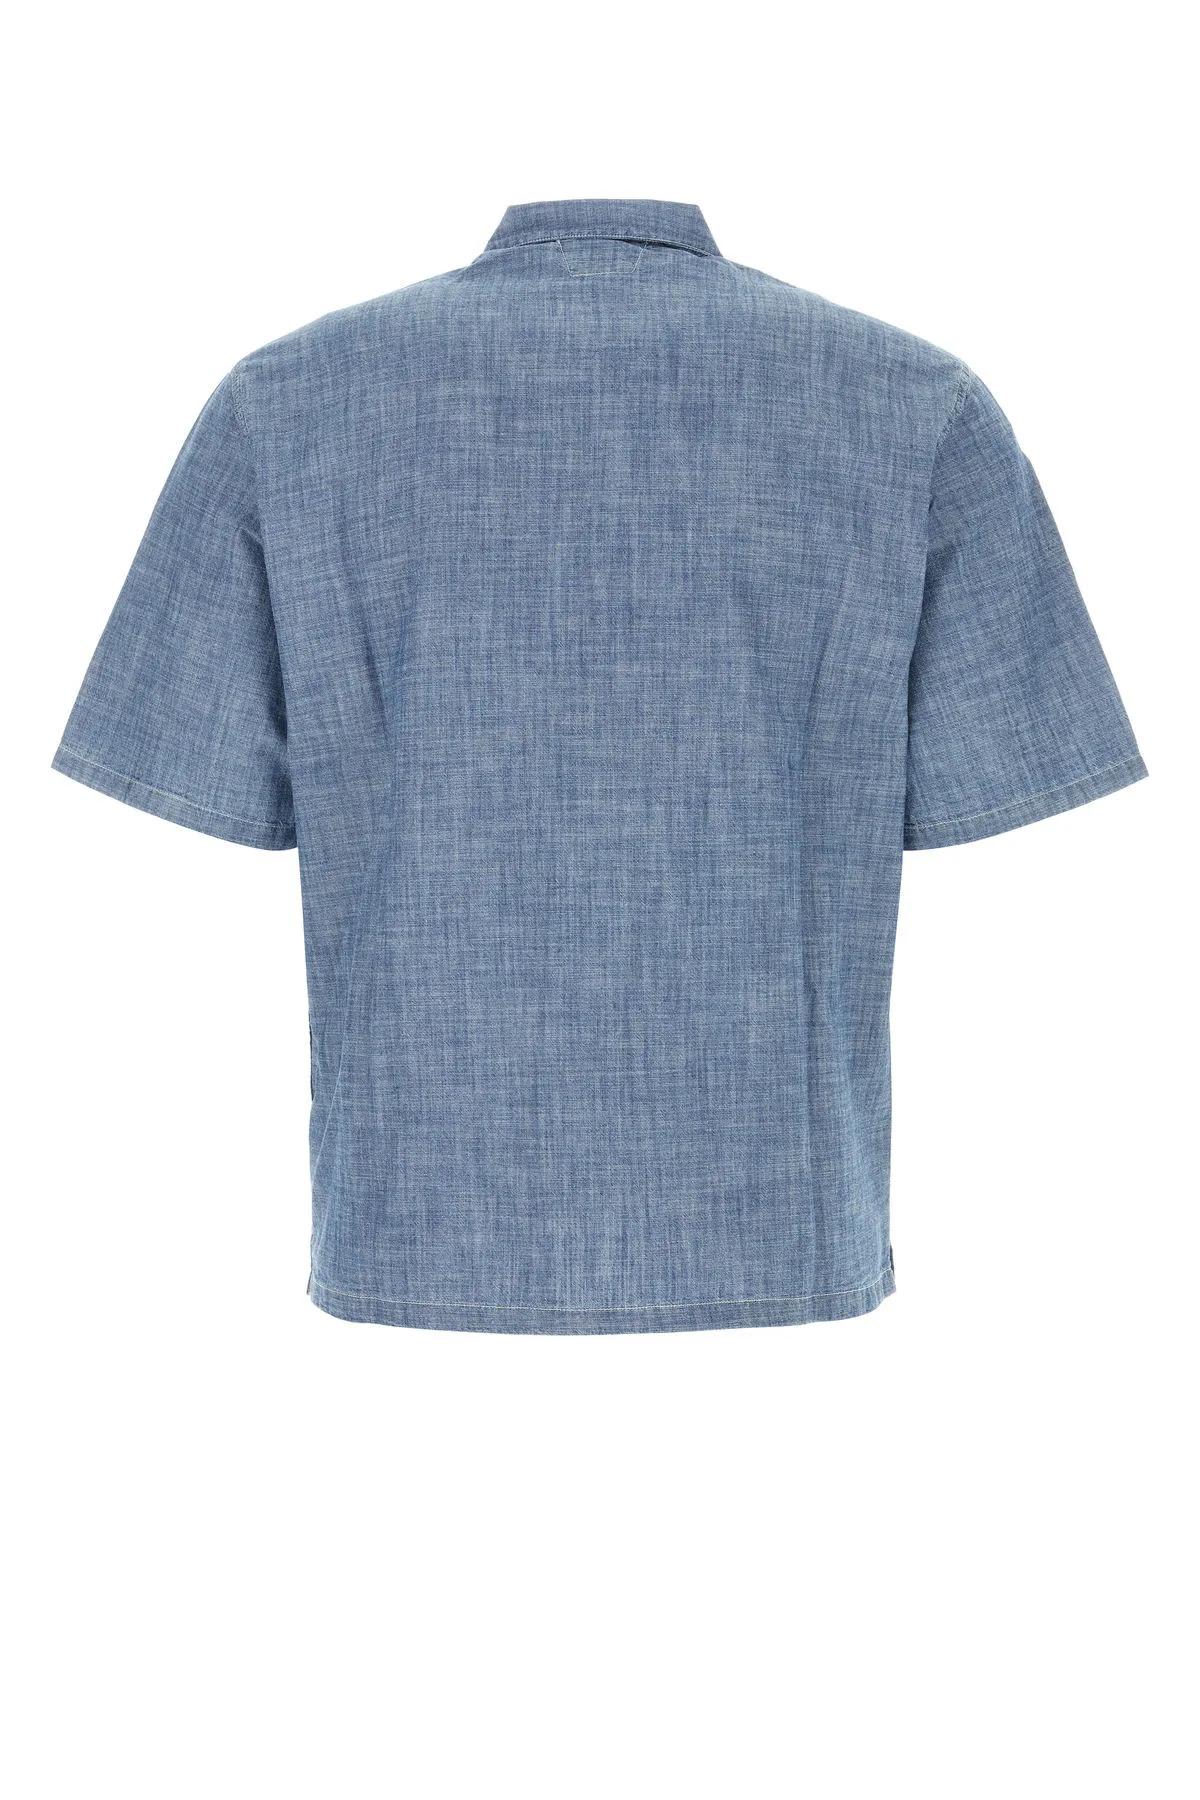 Shop C.p. Company Denim Shirt In Clear Blue